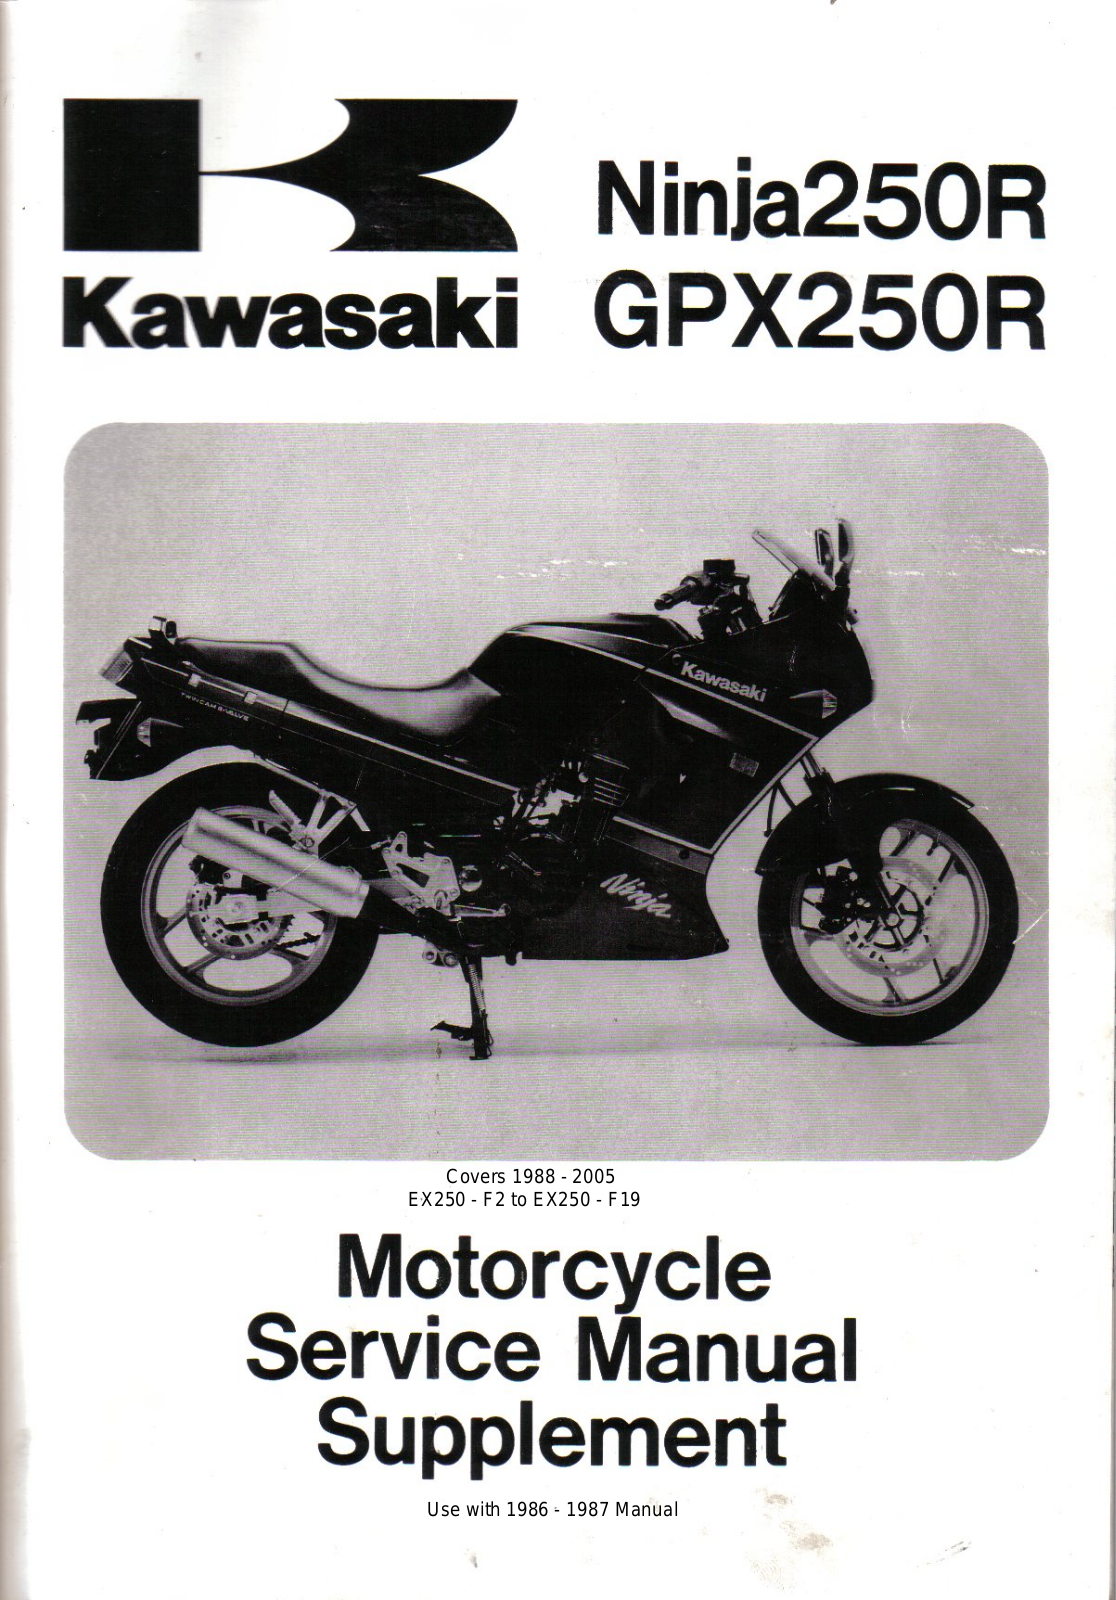 Kawasaki NINJA GPX250R (1988-2005) User Manual